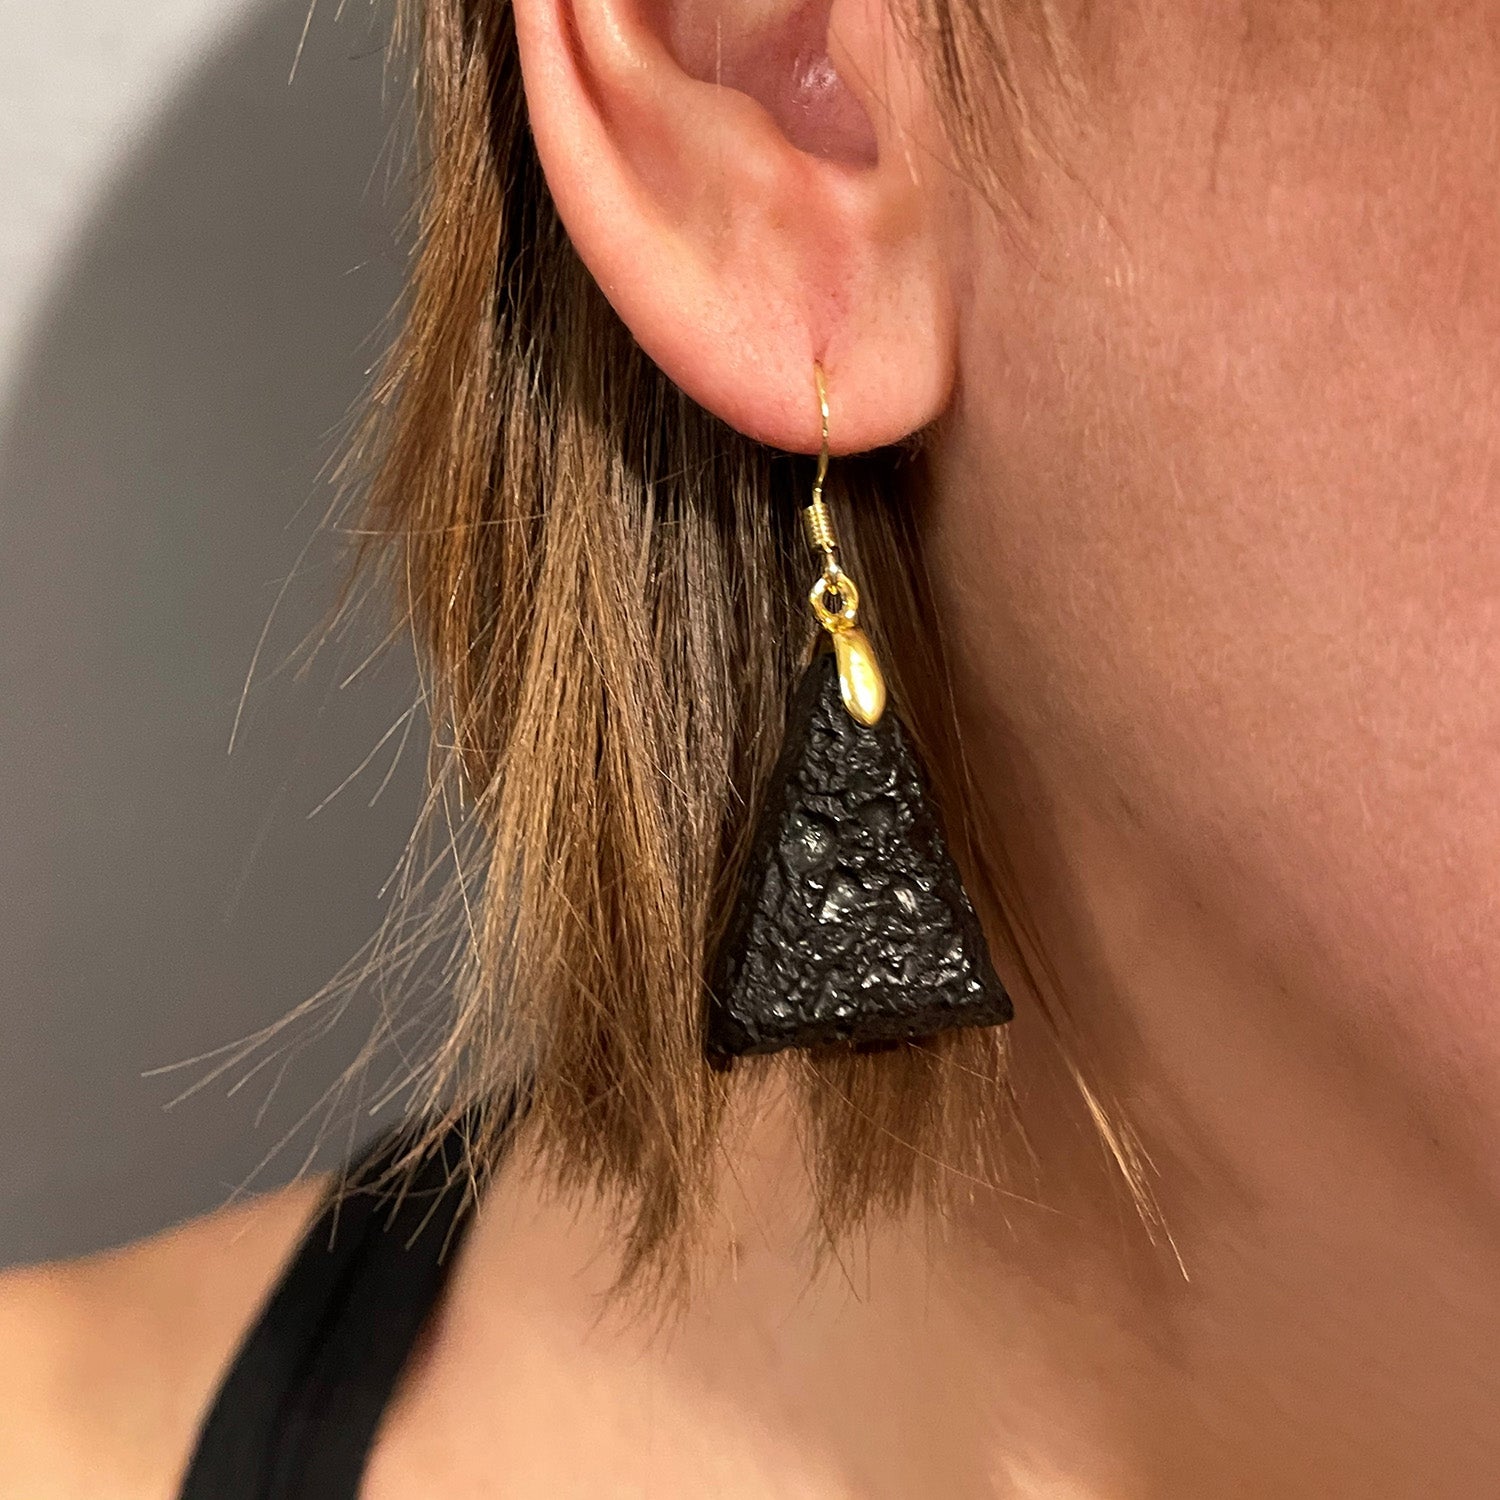 Triangle earrings in raw charcoal, gold metal